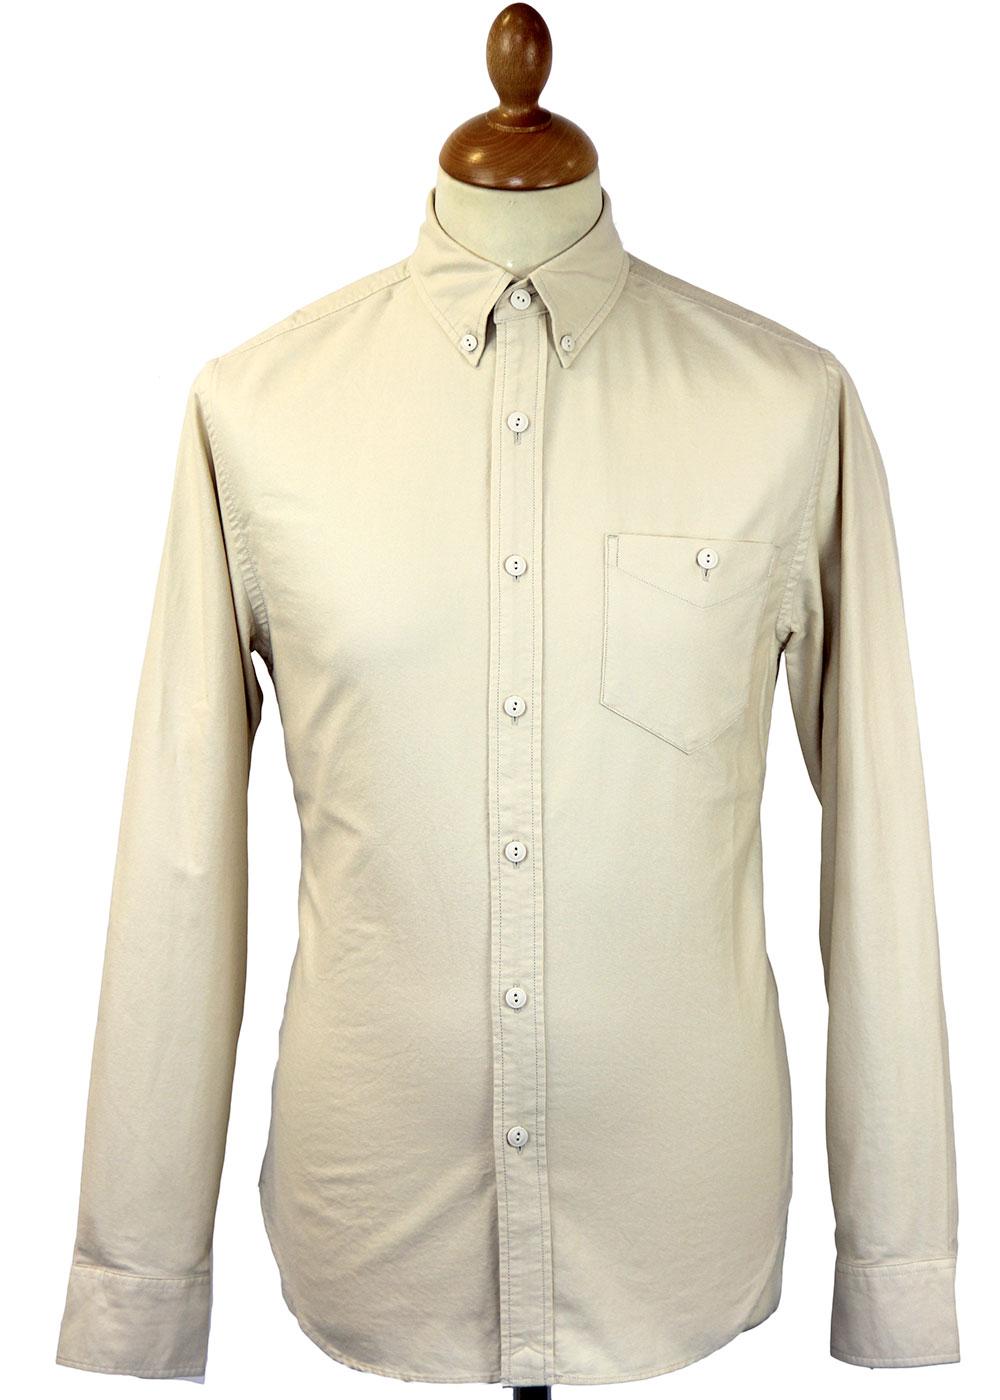 Pendleton Lowell Retro Mod Ivy League Oxford Shirt Vintage White